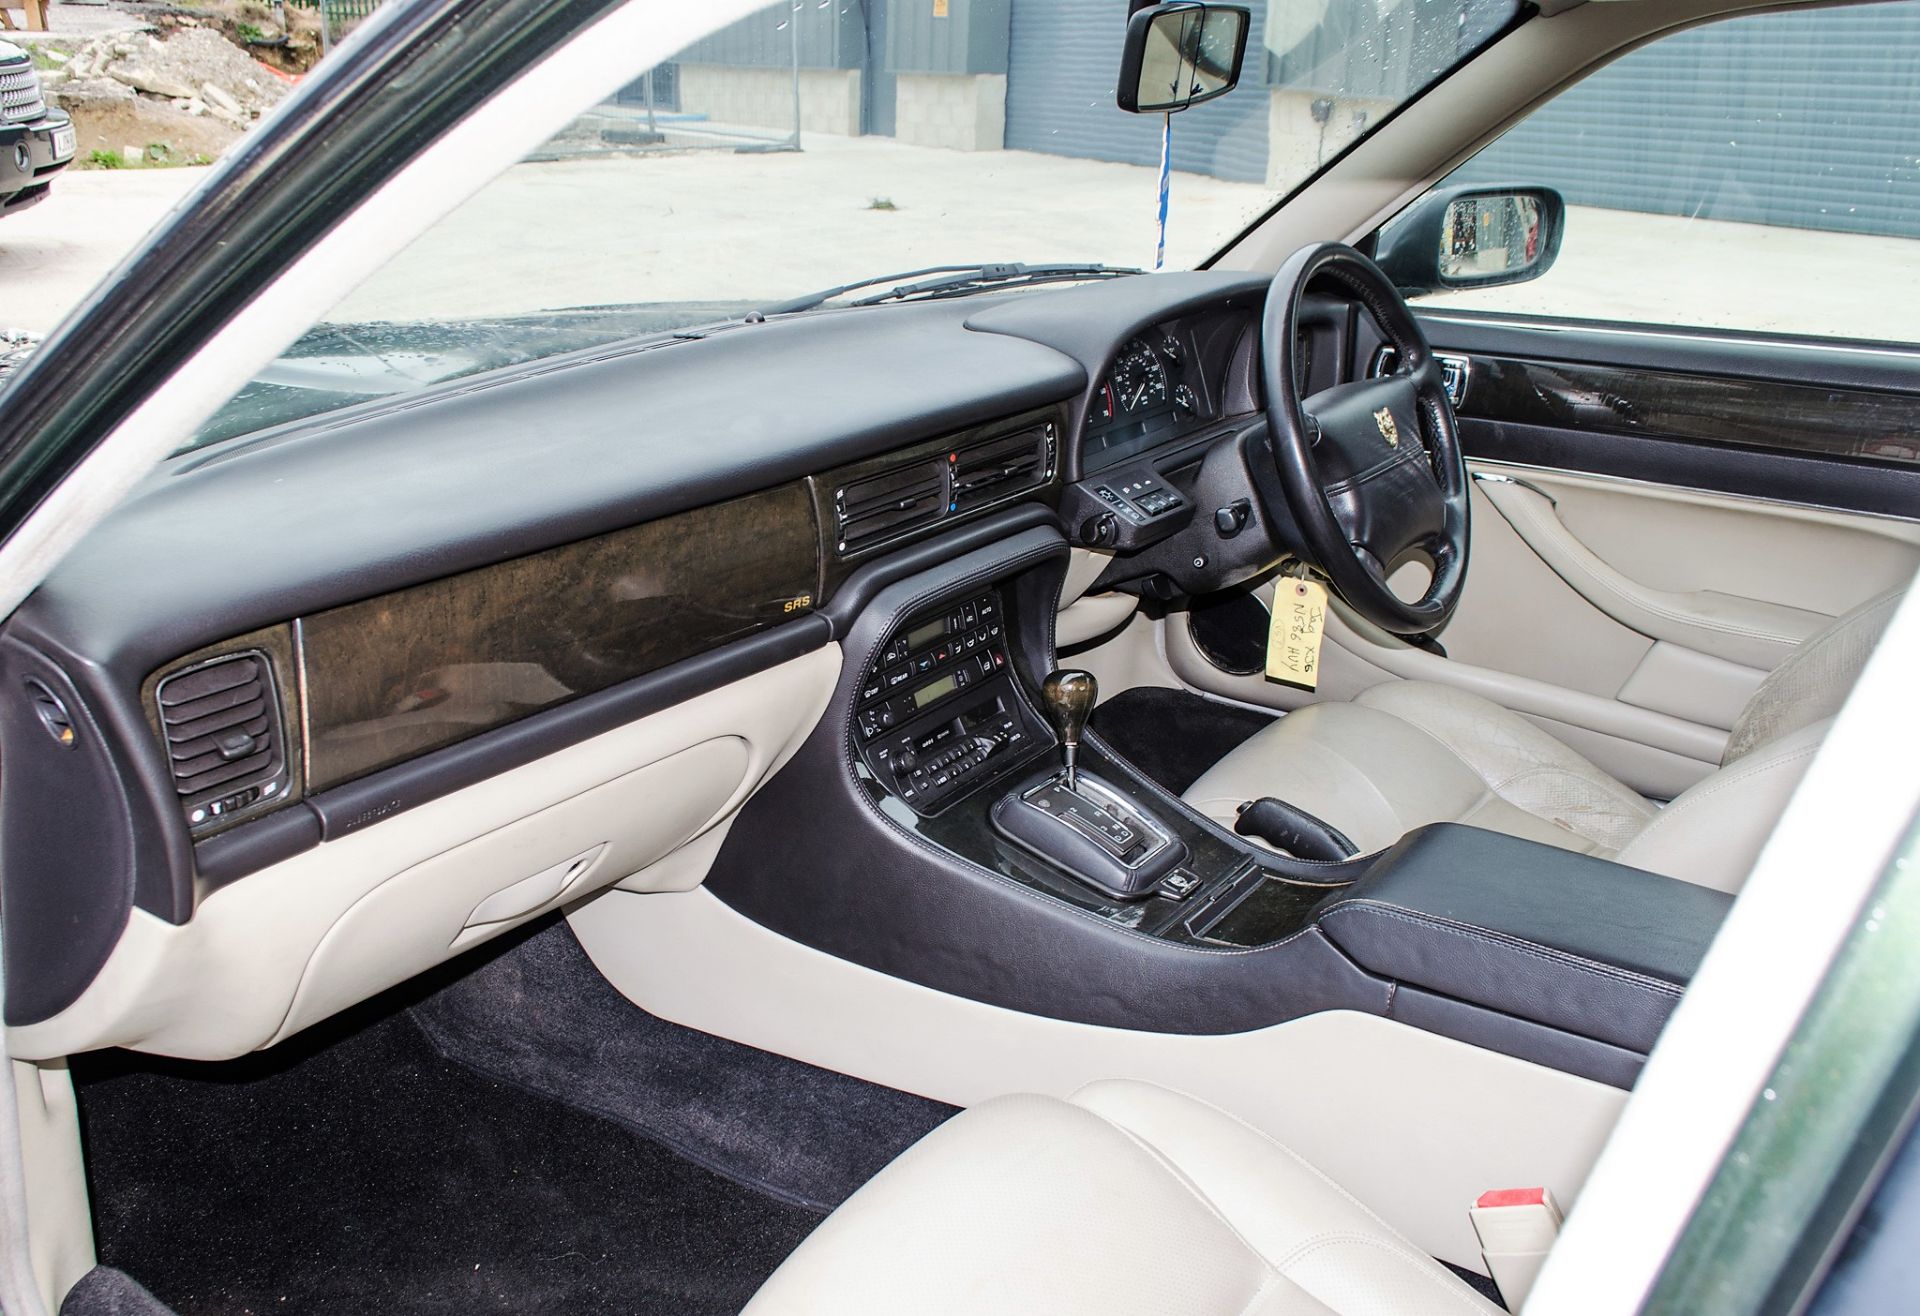 Jaguar XJ6 3.2 Sport petrol automatic 4 door saloon car Registration Number: N586 HUY Date of - Image 19 of 28